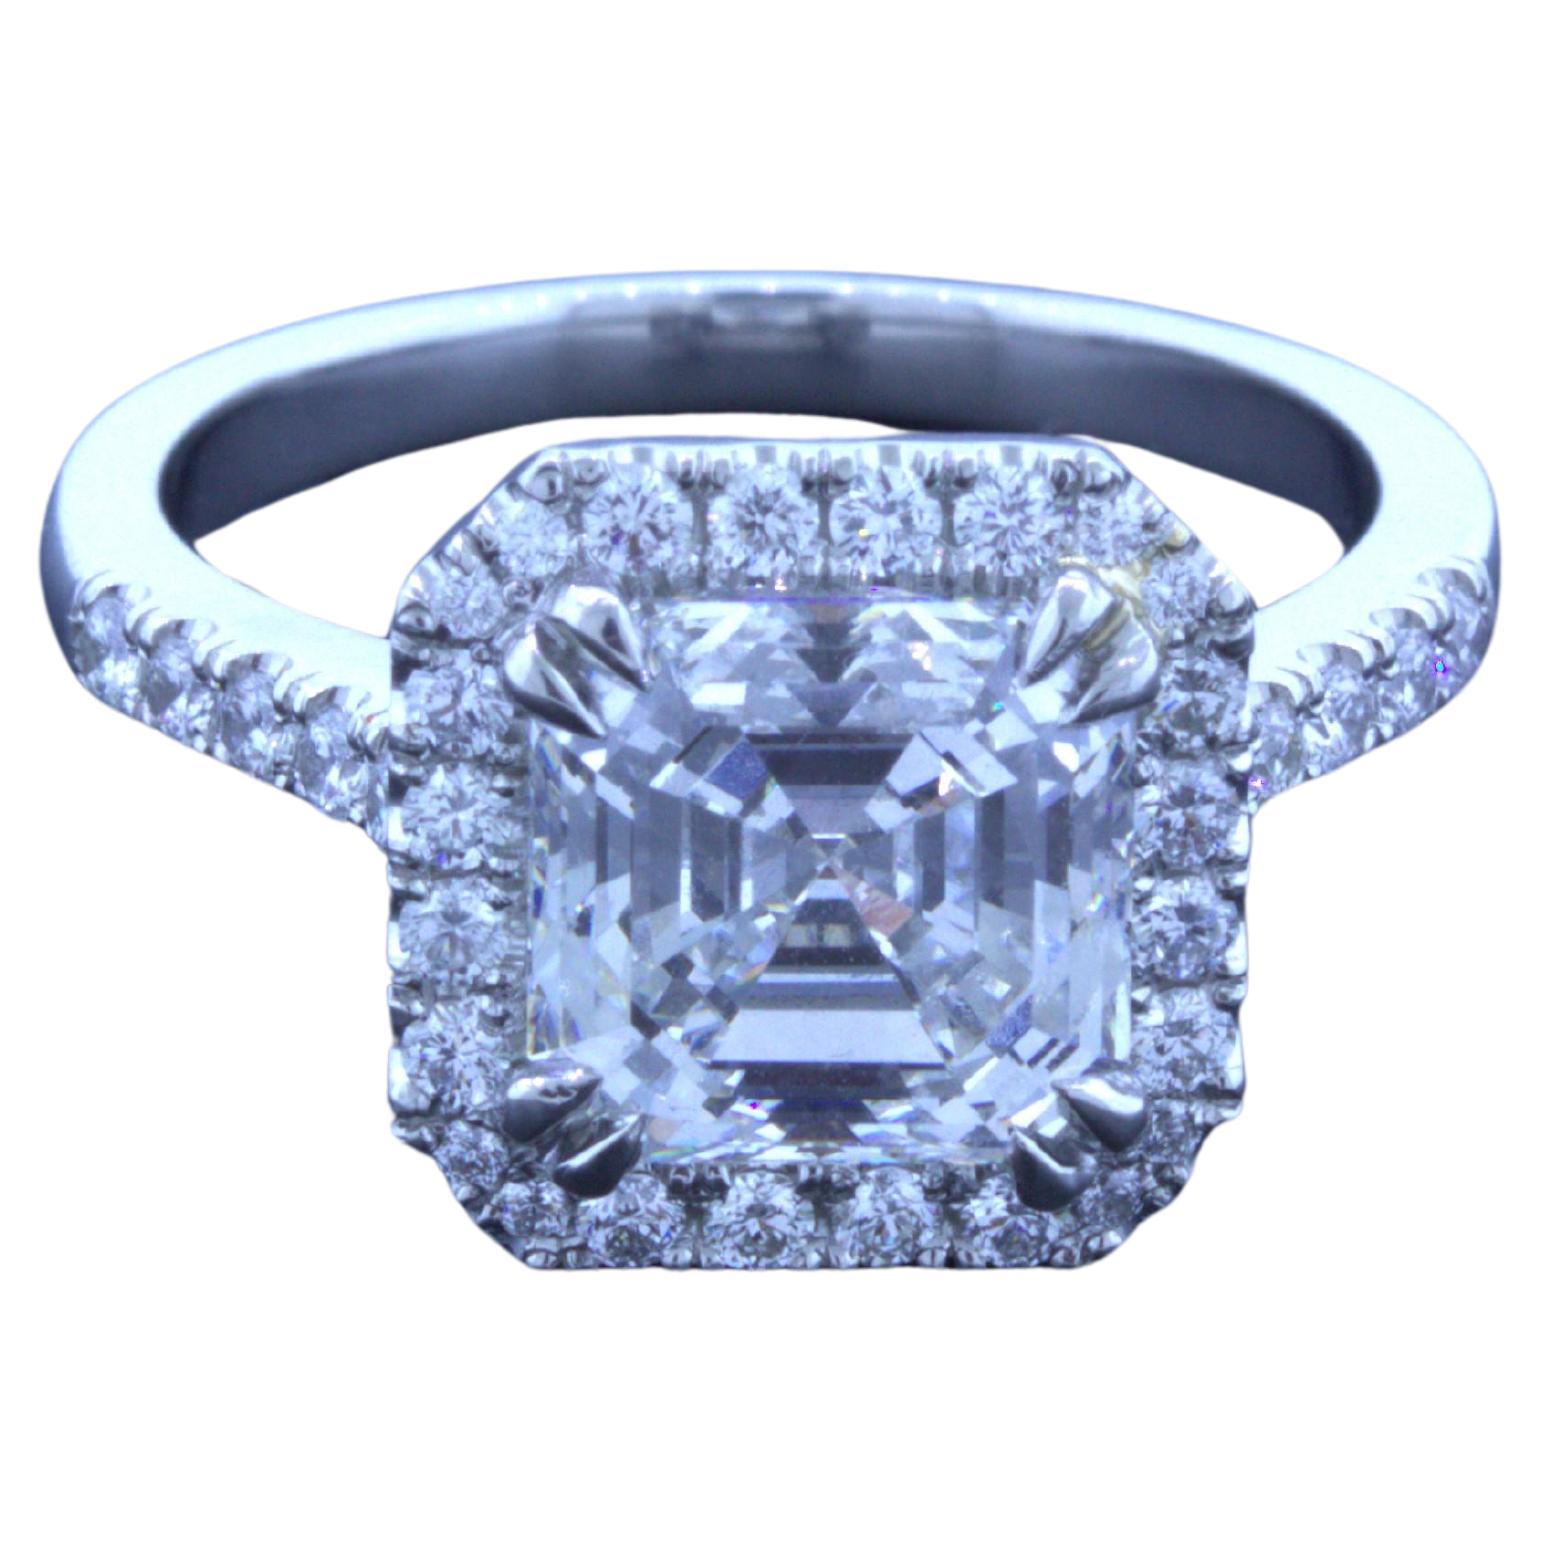 Platin-Verlobungsring mit 3,05 Karat Diamant im Asscher-Schliff, E-VS1 EGL-zertifiziert